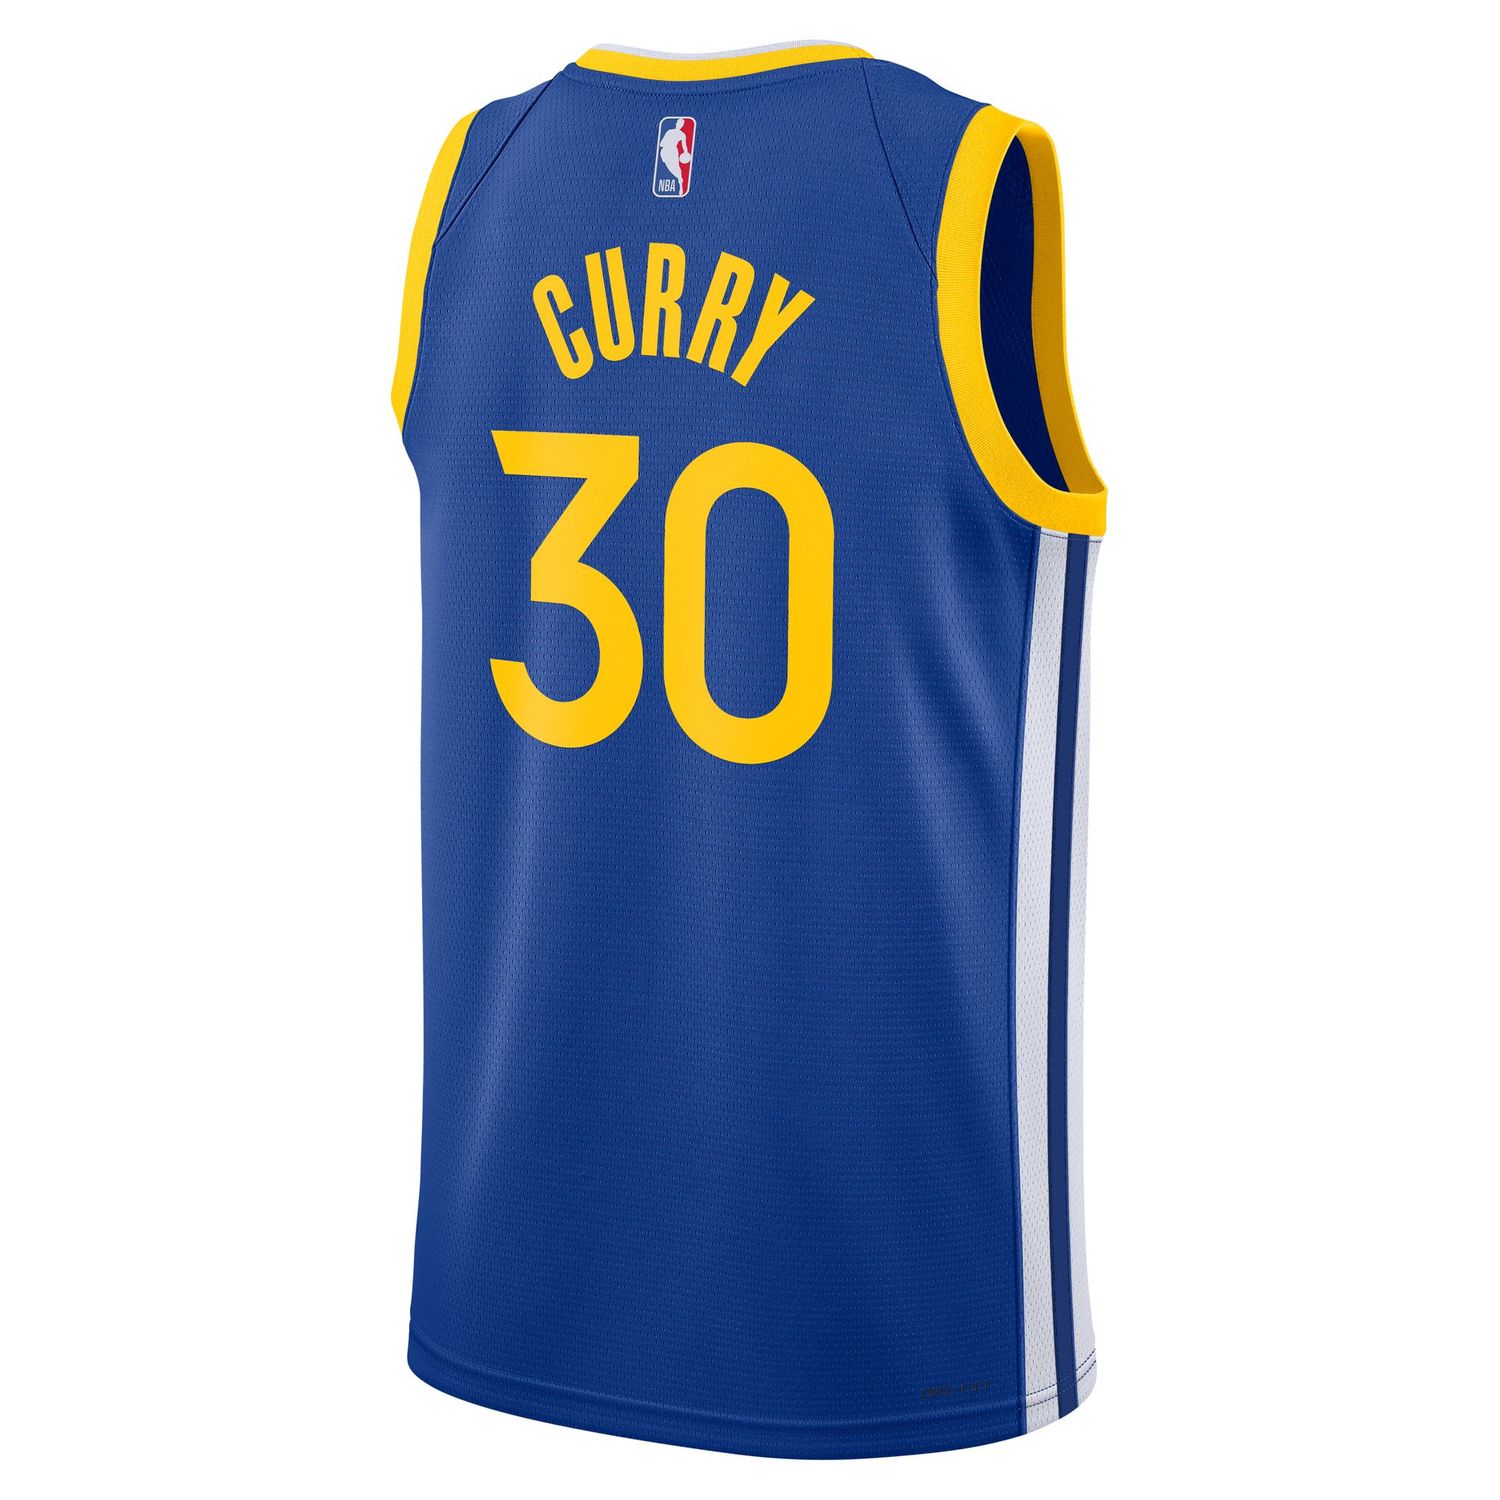 Nike NBA Stephen Curry Icon Edition Swingman Jersey